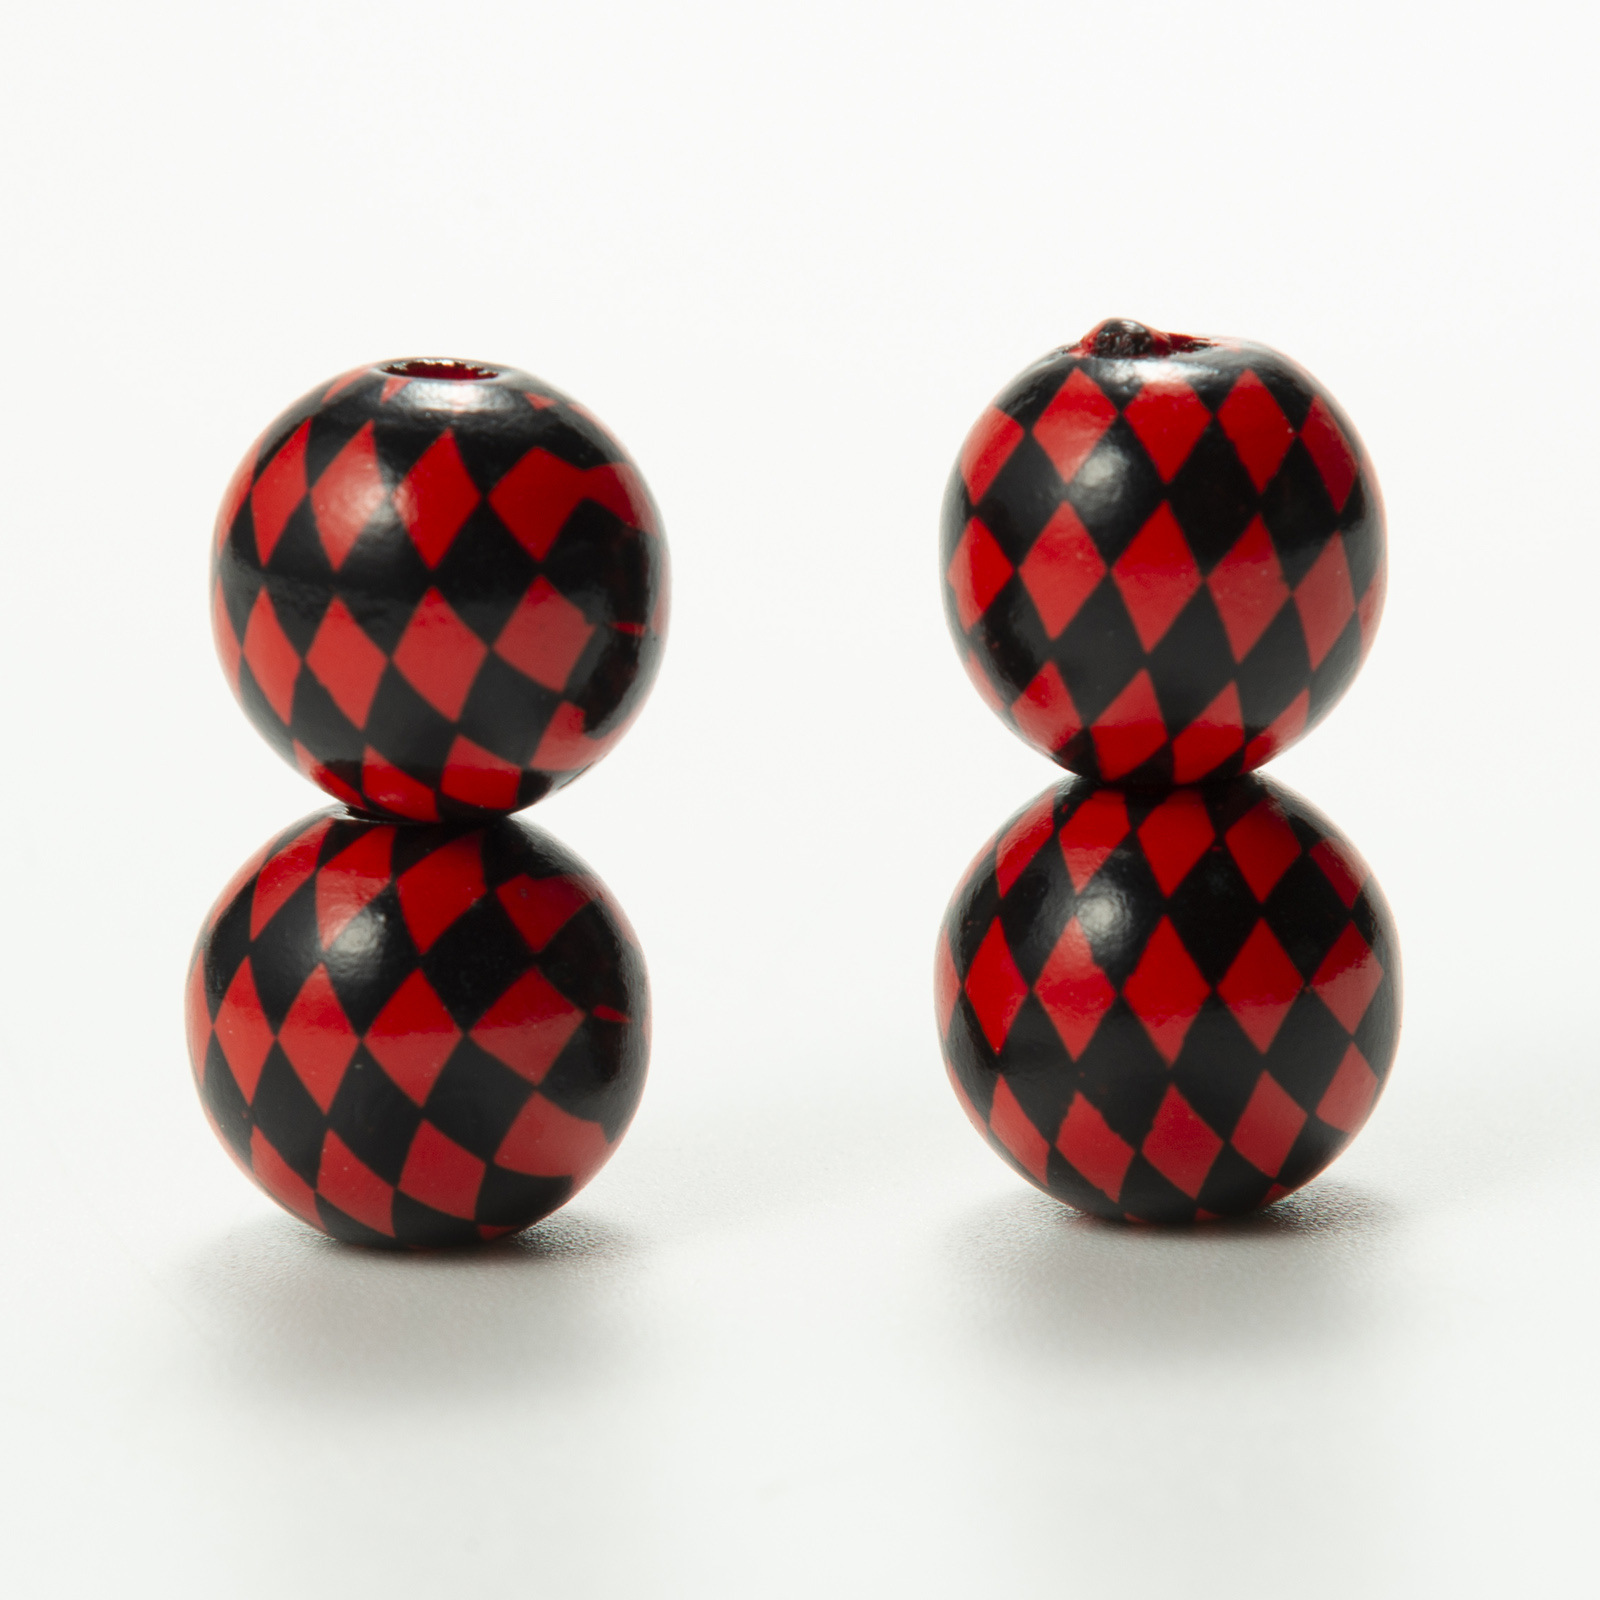 Red and black diamond beads